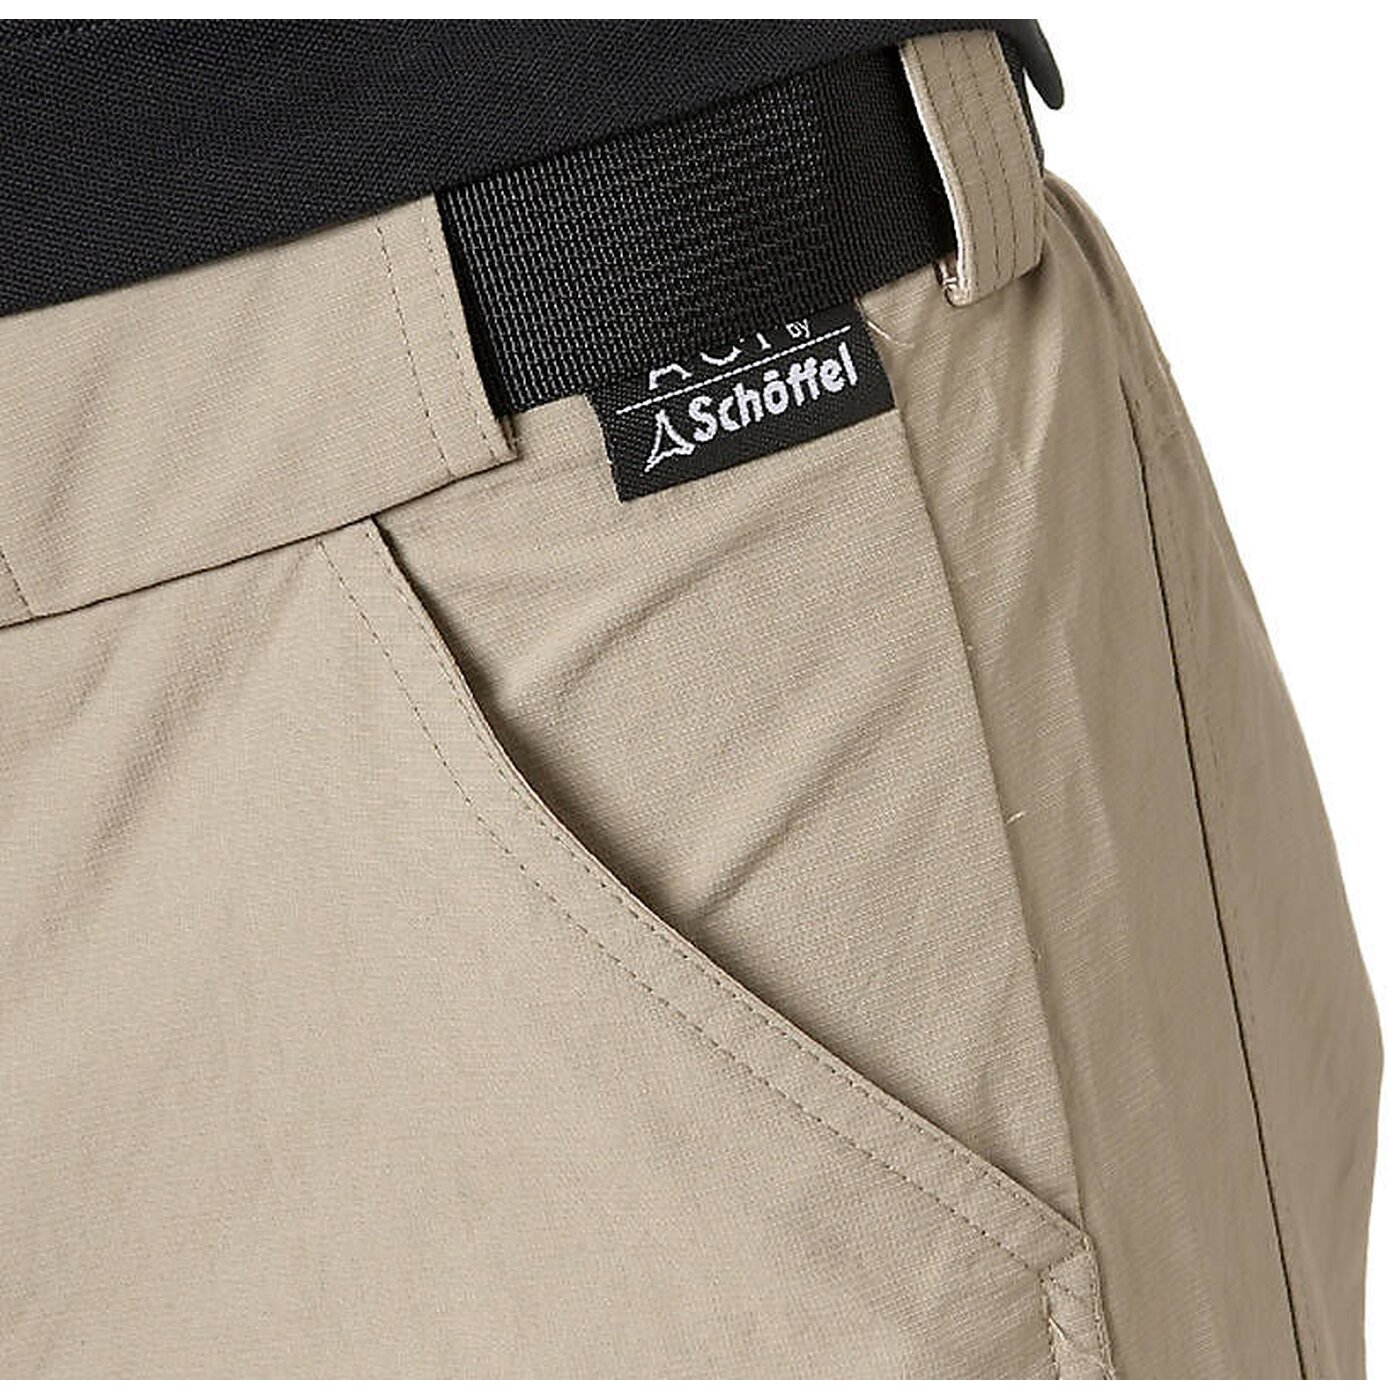 SCHÖFFEL Outdoor Pants L II NOS online kaufen | Outdoorhosen